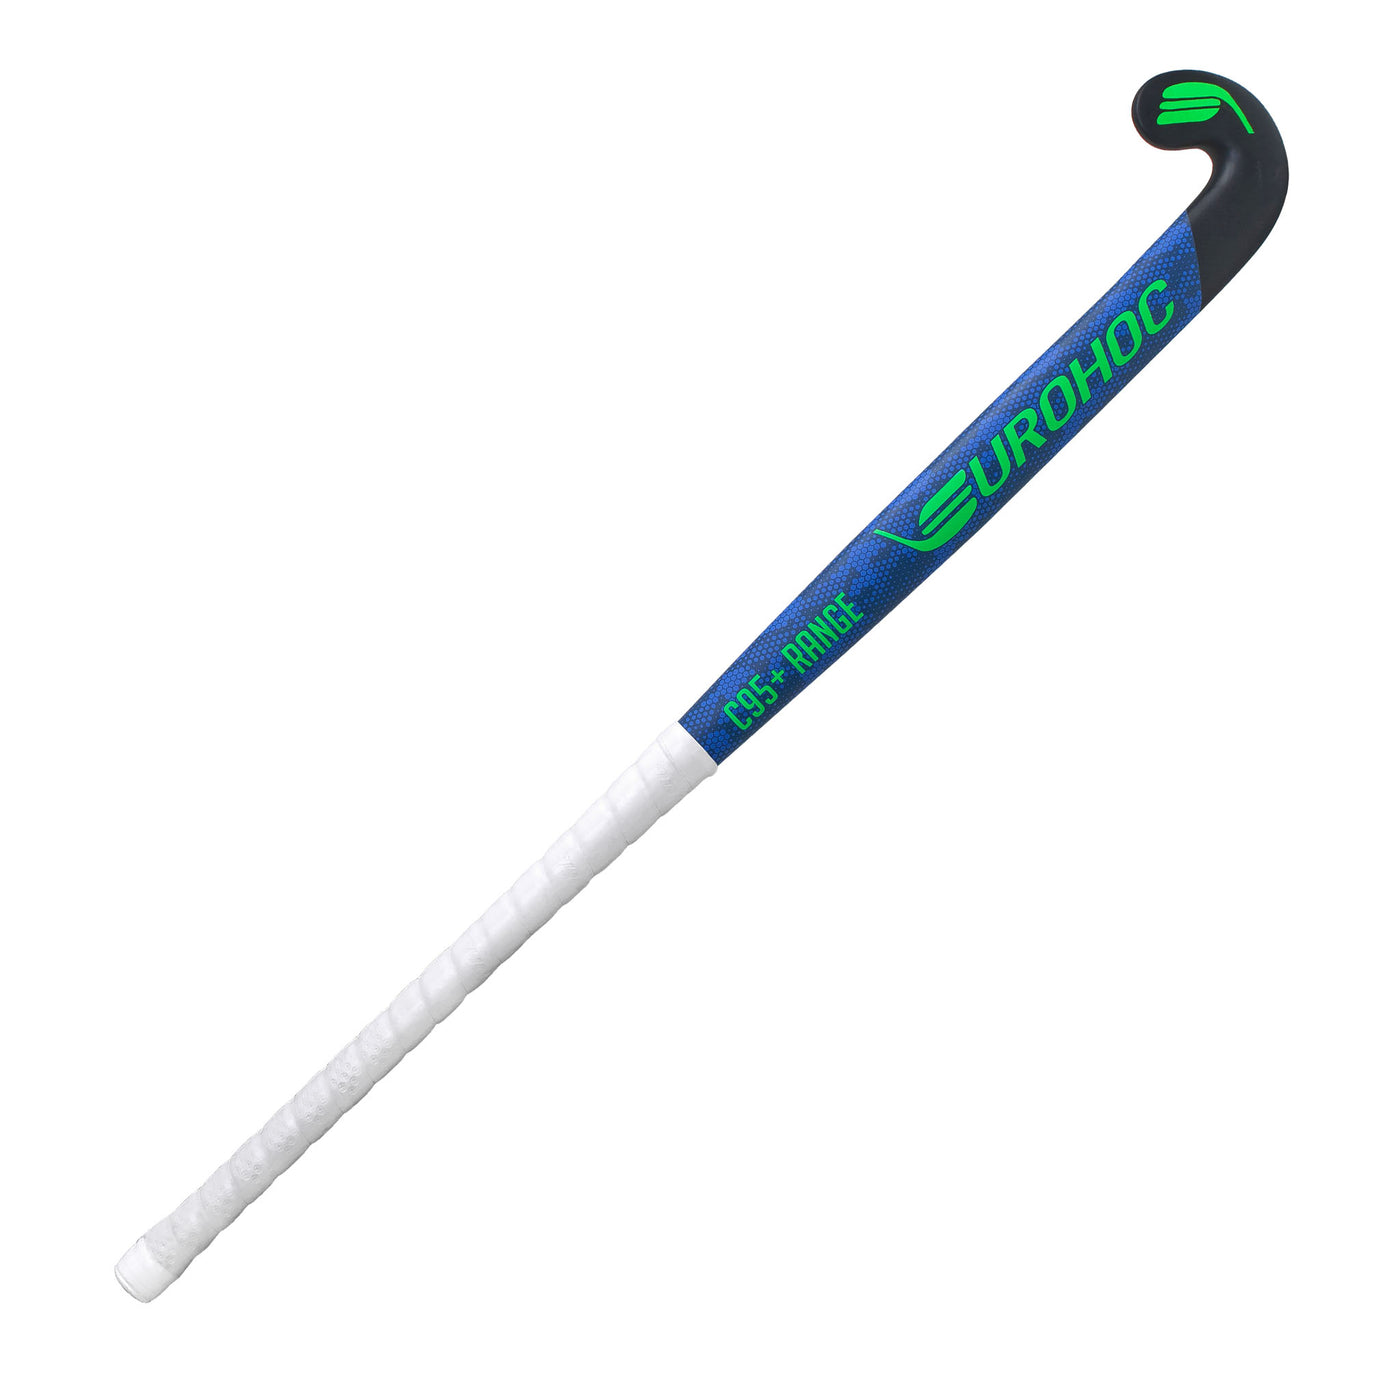 Eurohoc 95% Carbon Hockey Stick